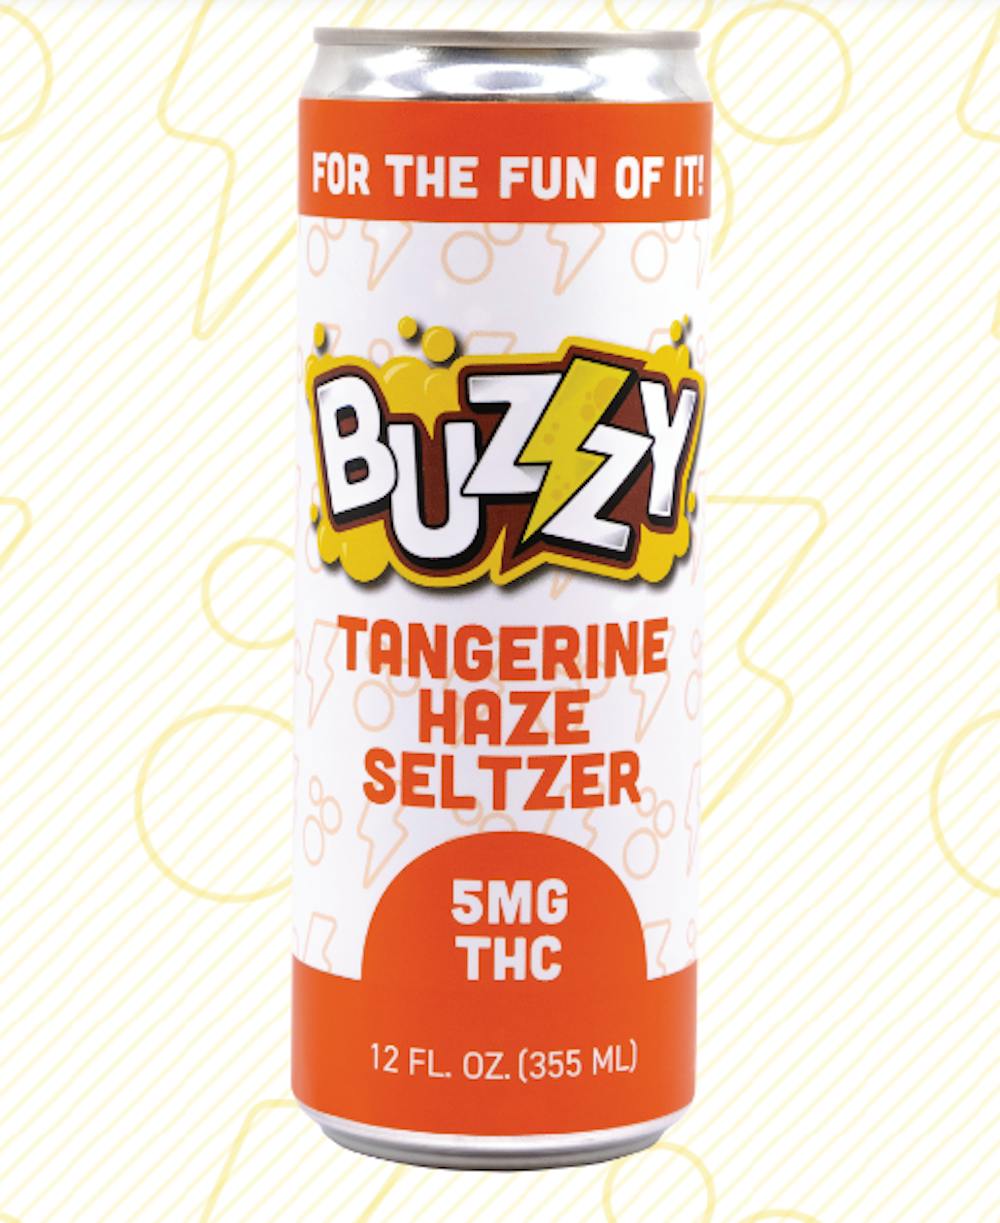 Product 5mg Tangerine Haze Seltzer